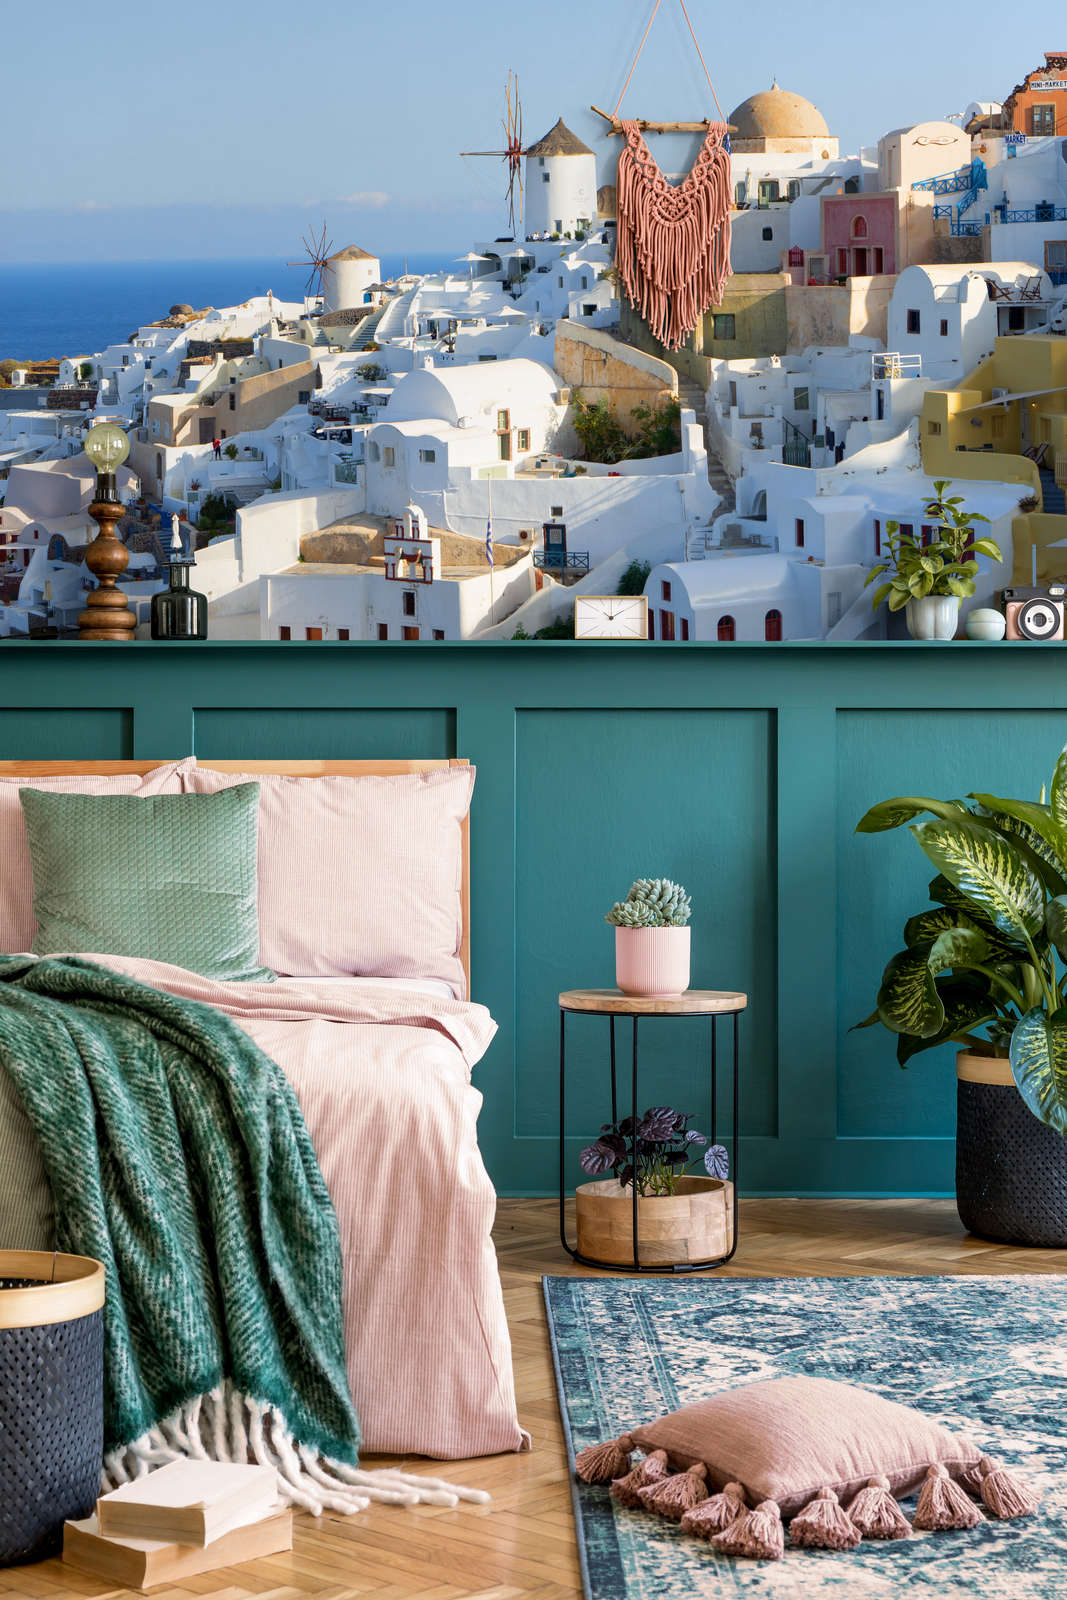             Digital behang Santorini's smalle straatjes - Mat glad vlies
        